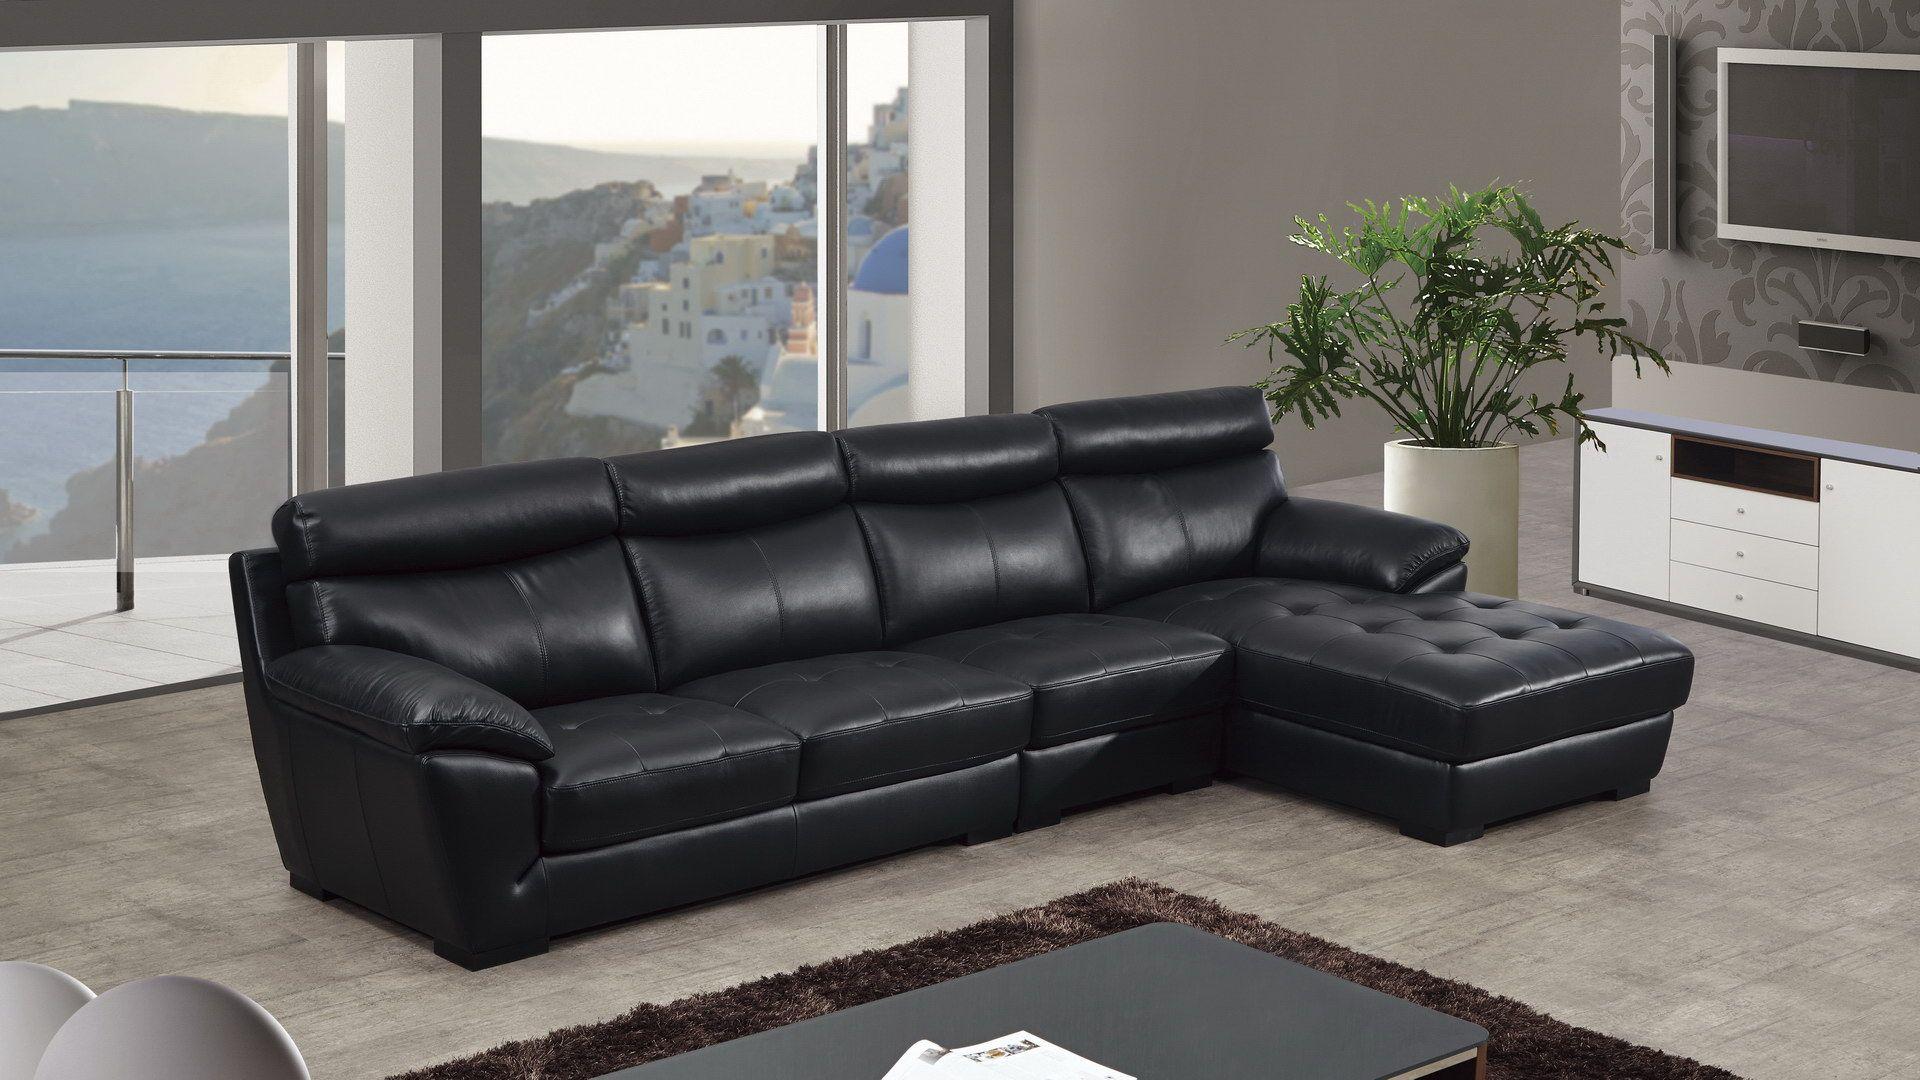 Contemporary, Modern Sectional Sofa EK-L021-BK EK-L021L-BK in Black Italian Leather